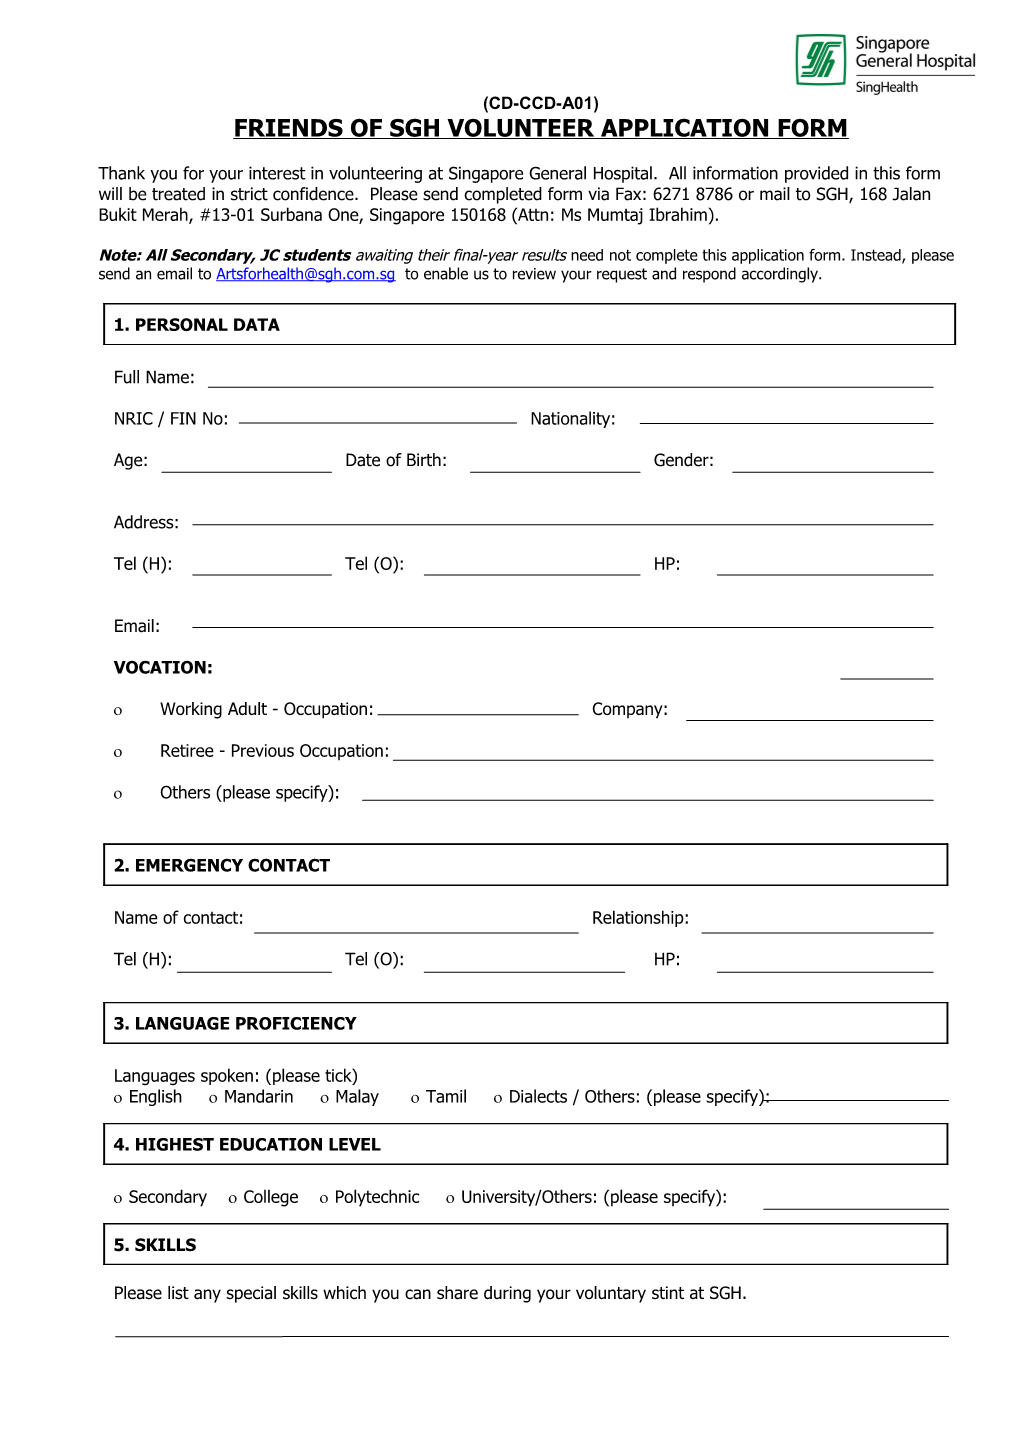 Friends of Sgh Volunteer Application Form